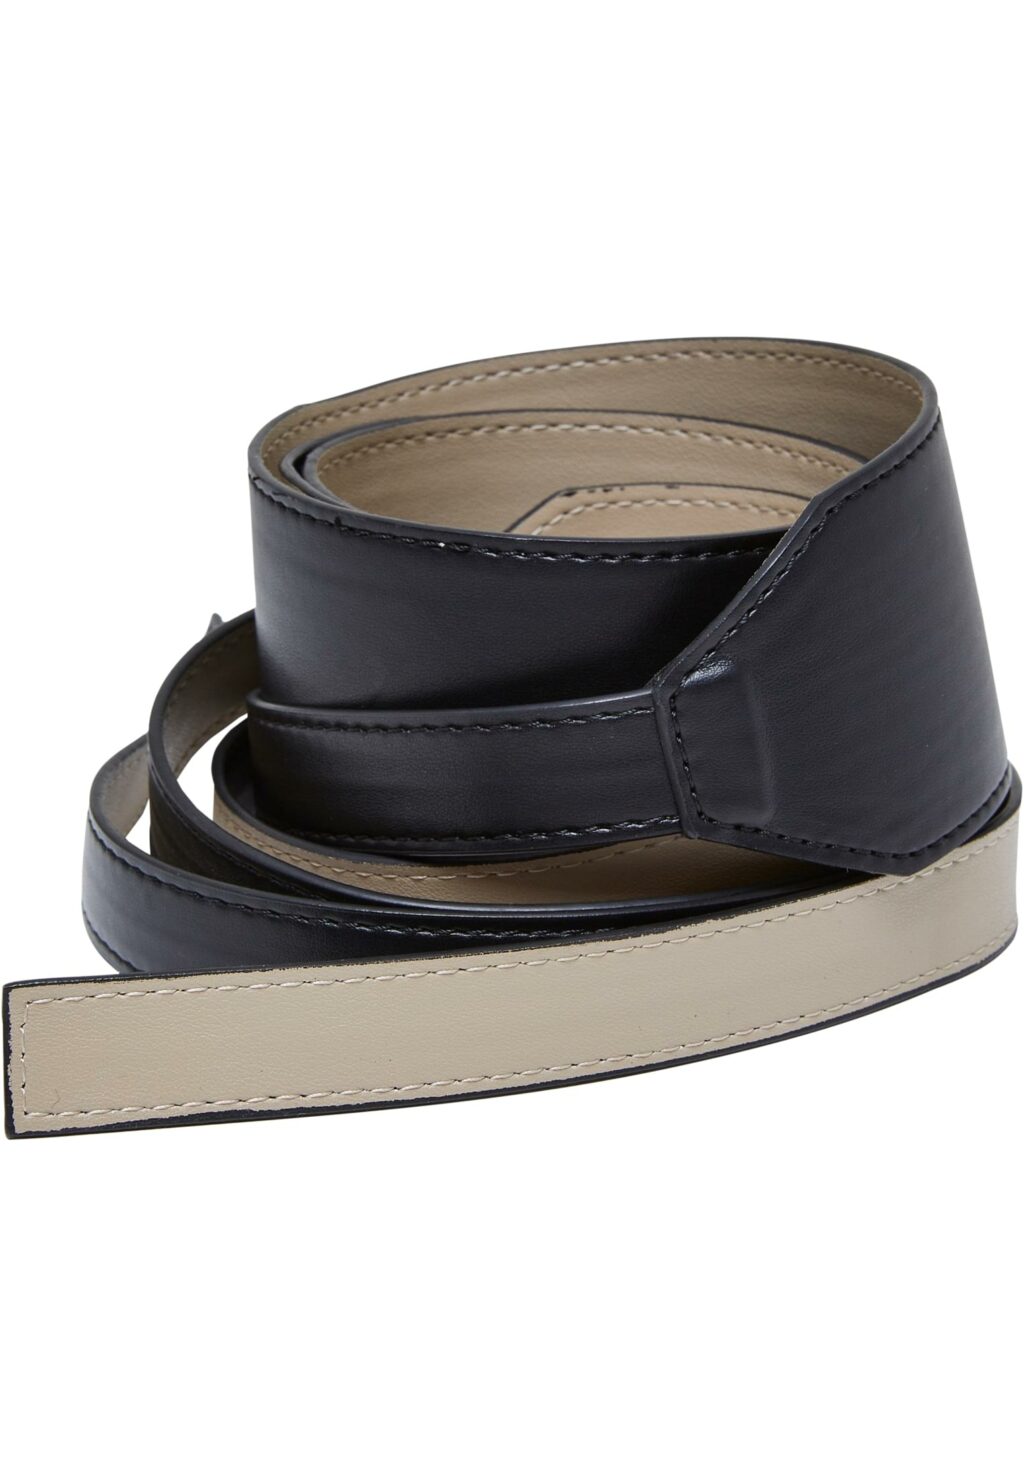 Synthetic Leather Sash Belt black/warmsand TB6553